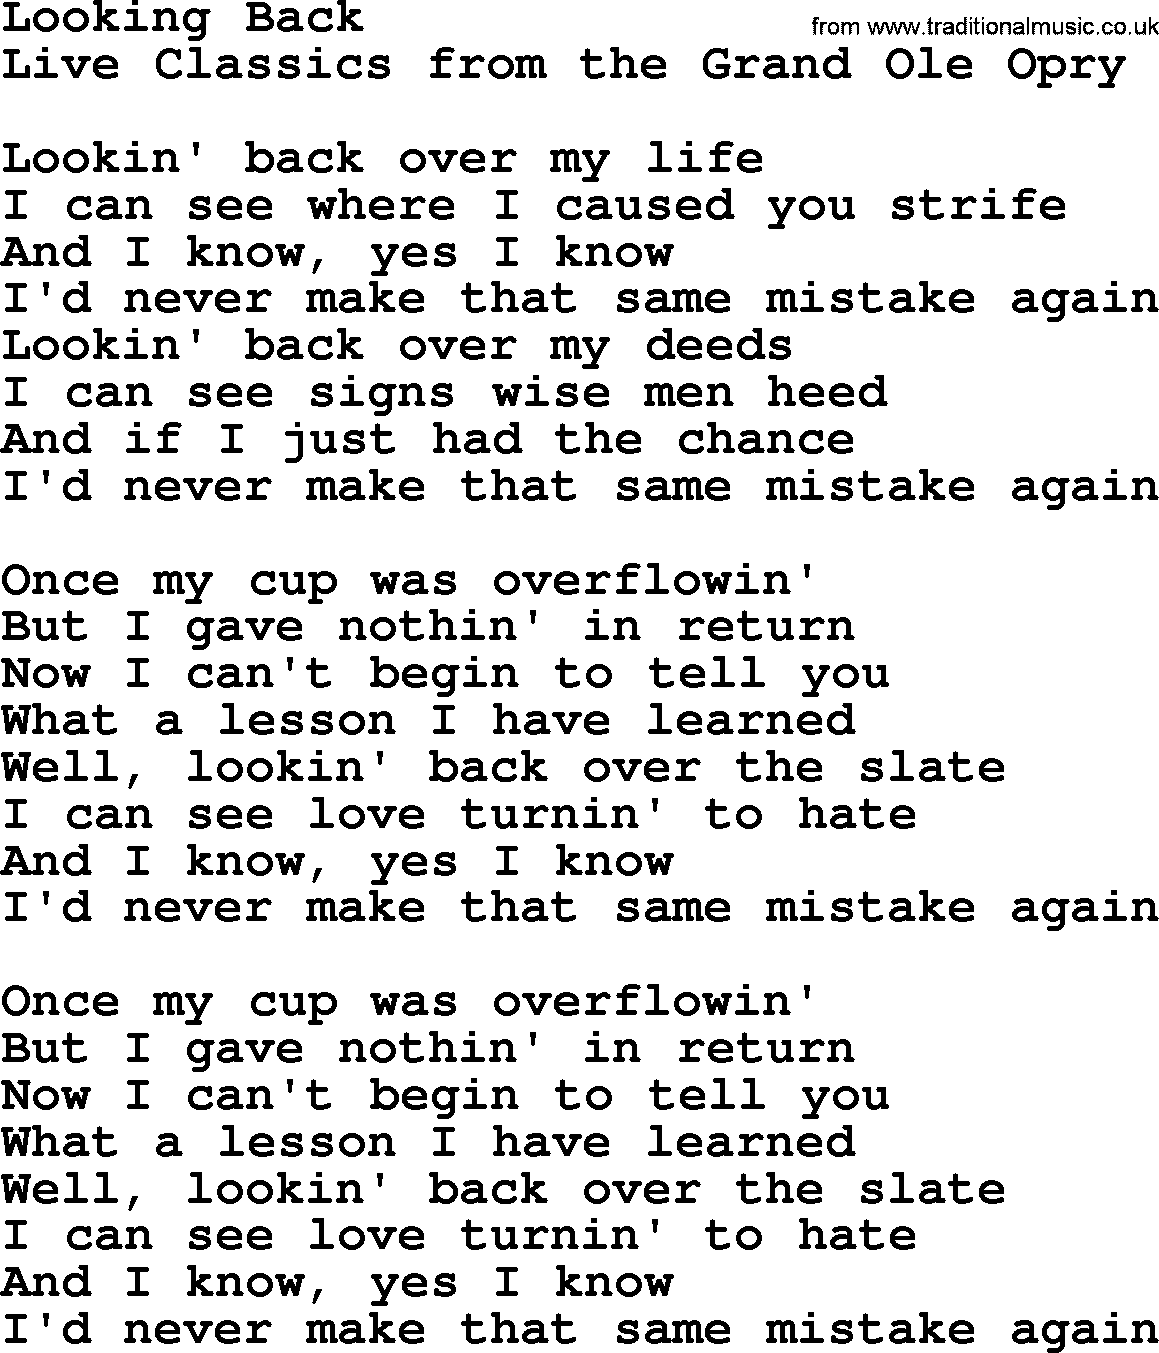 Marty Robbins song: Looking Back, lyrics